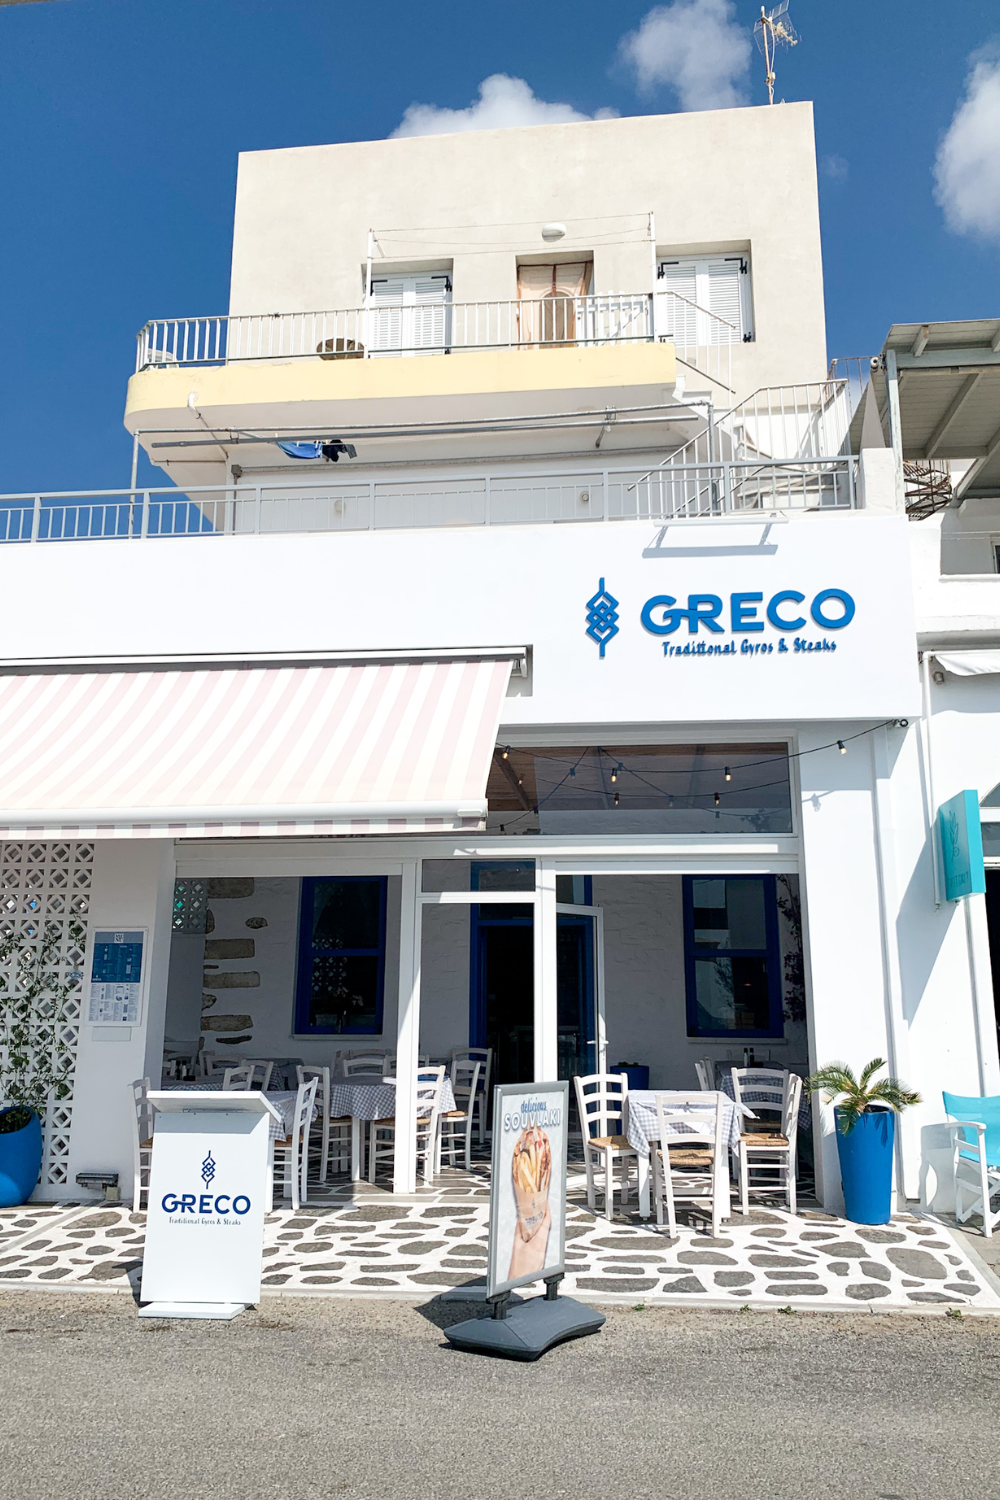 Greco restaurant in paros, greece